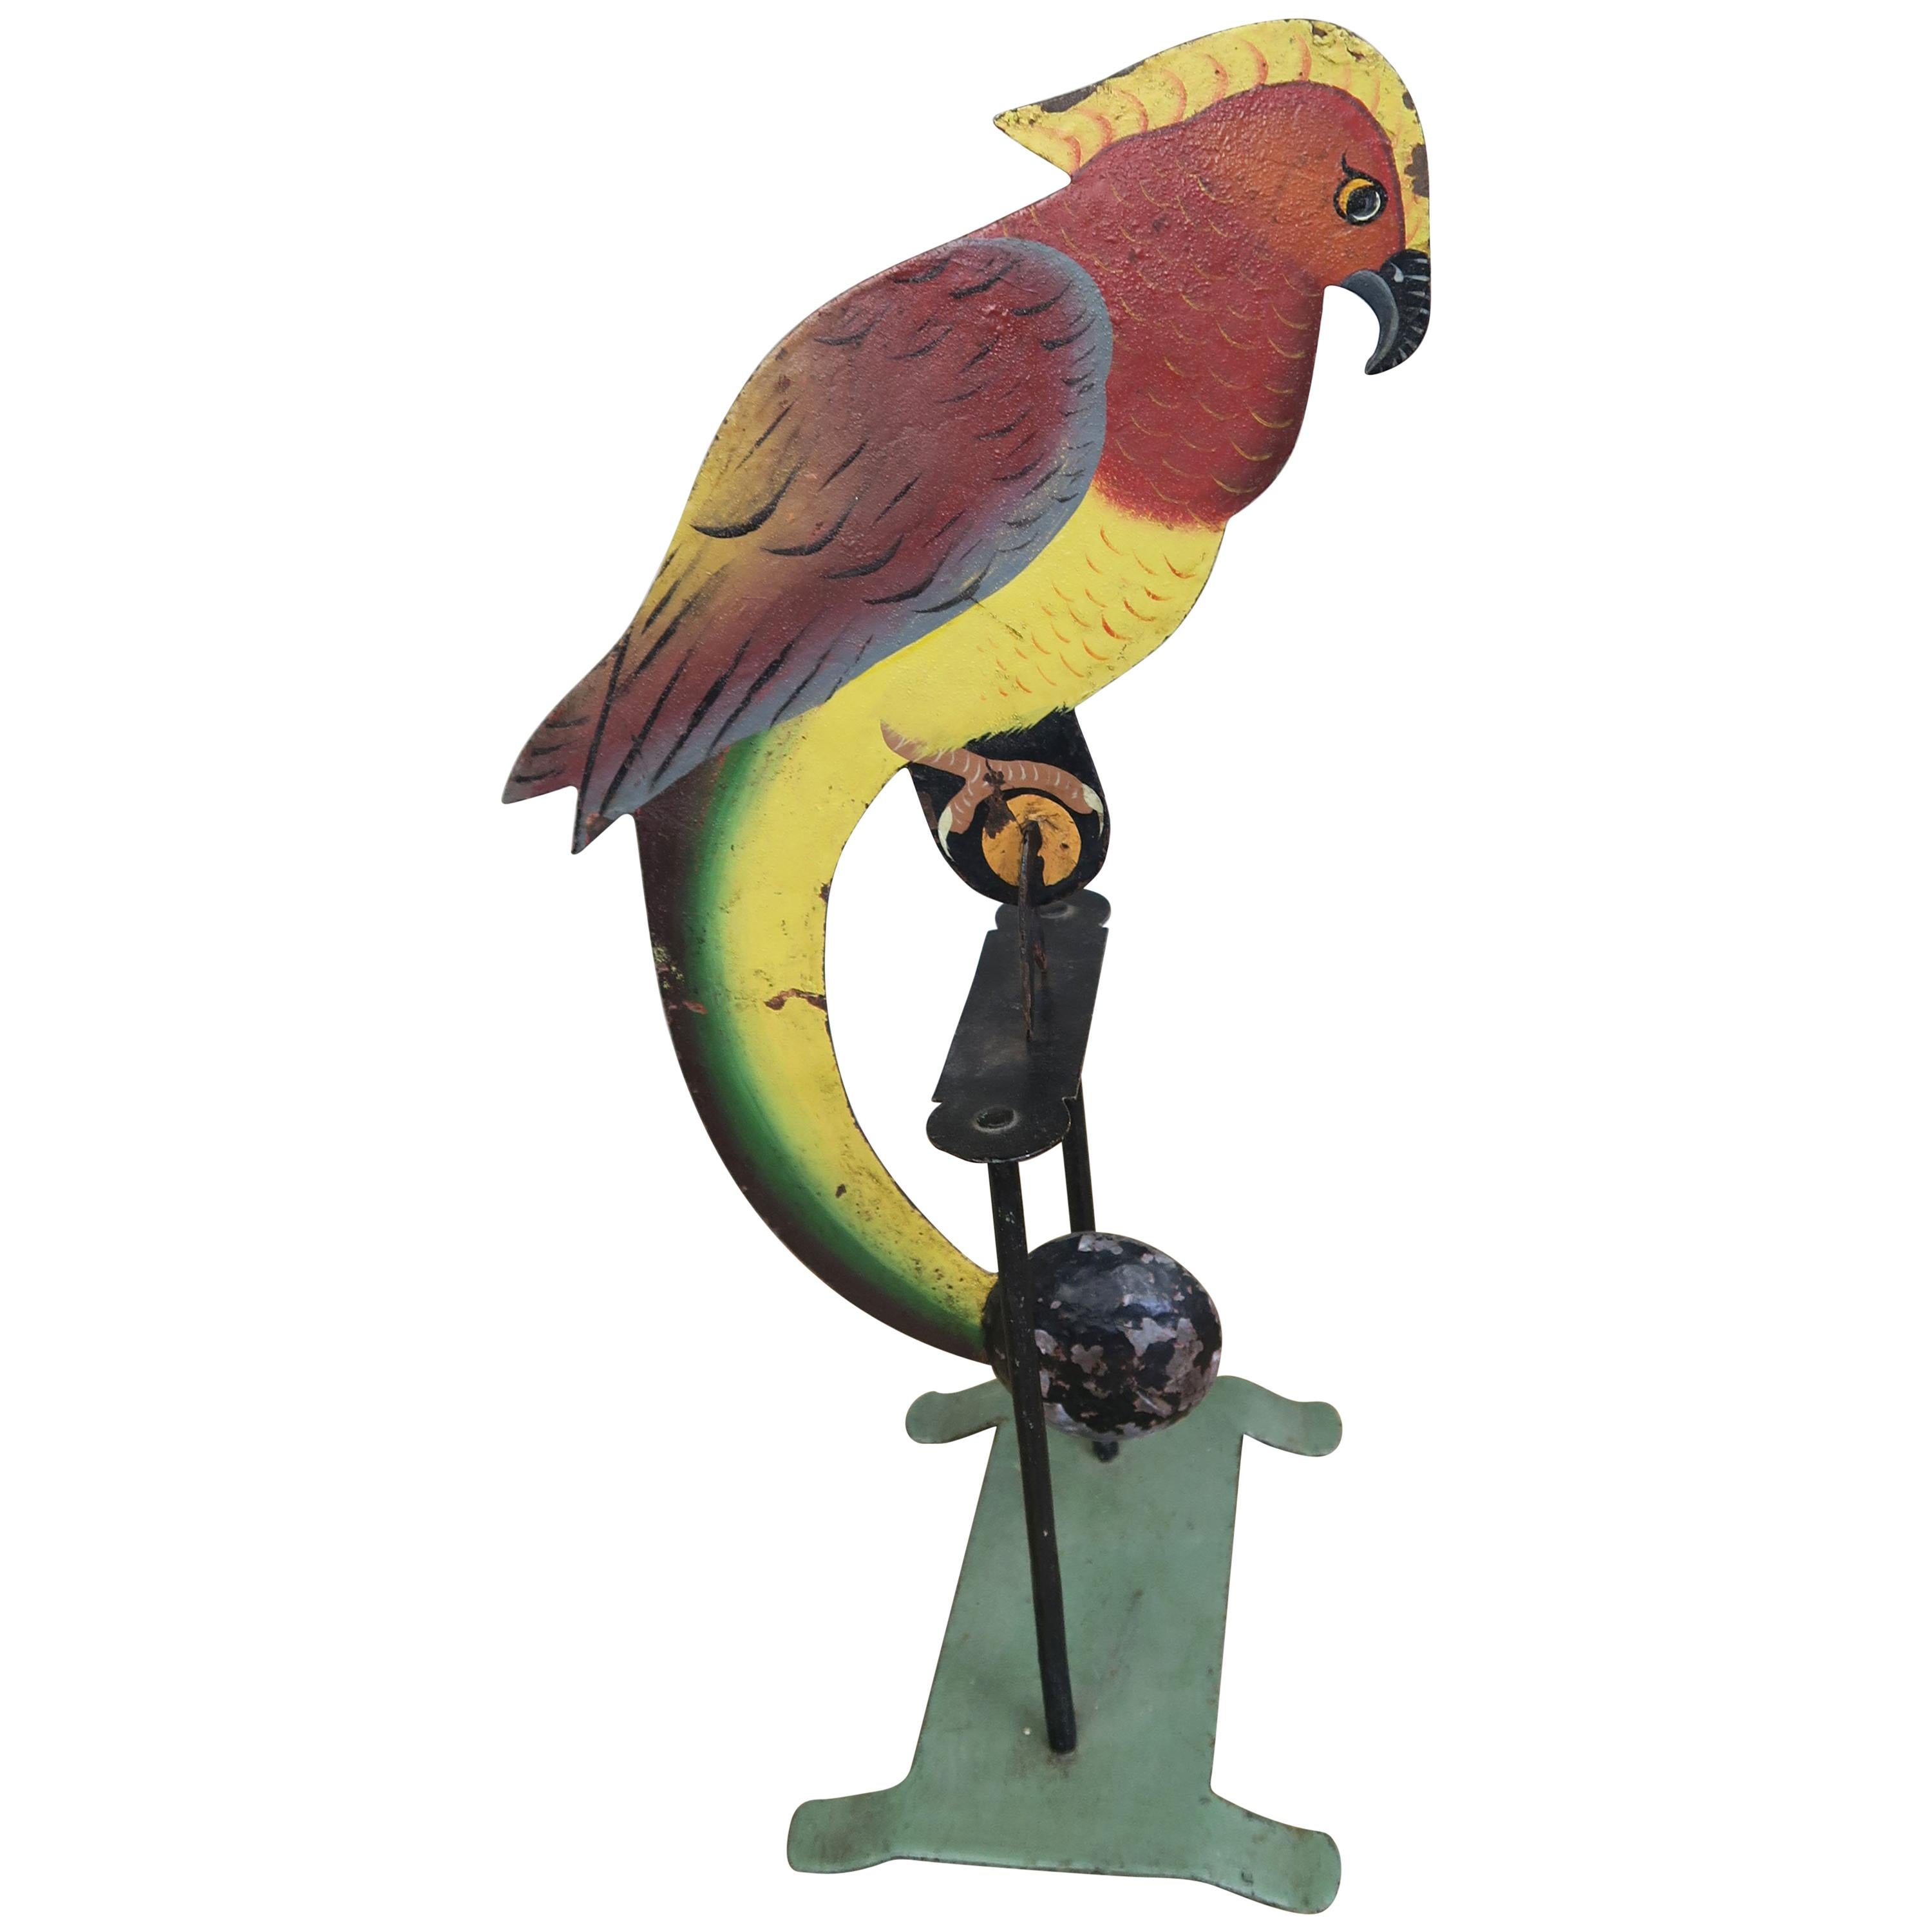 Charming American Folk Art Piece Depicting Balancing Parrot